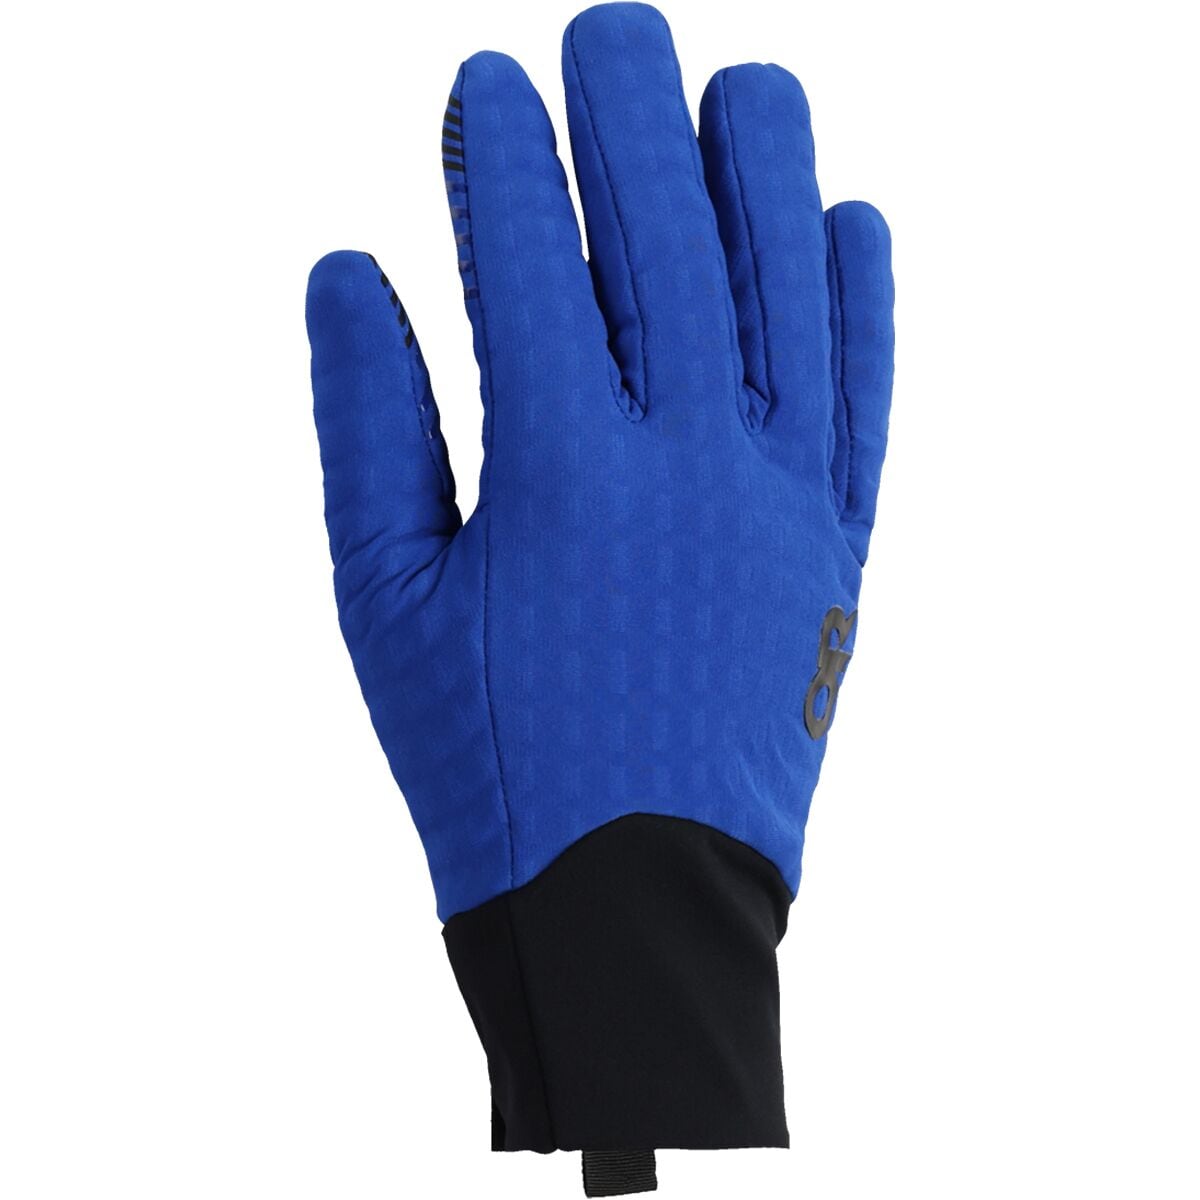 Outdoor Research Vigor Heavyweight Sensor Glove - Men's